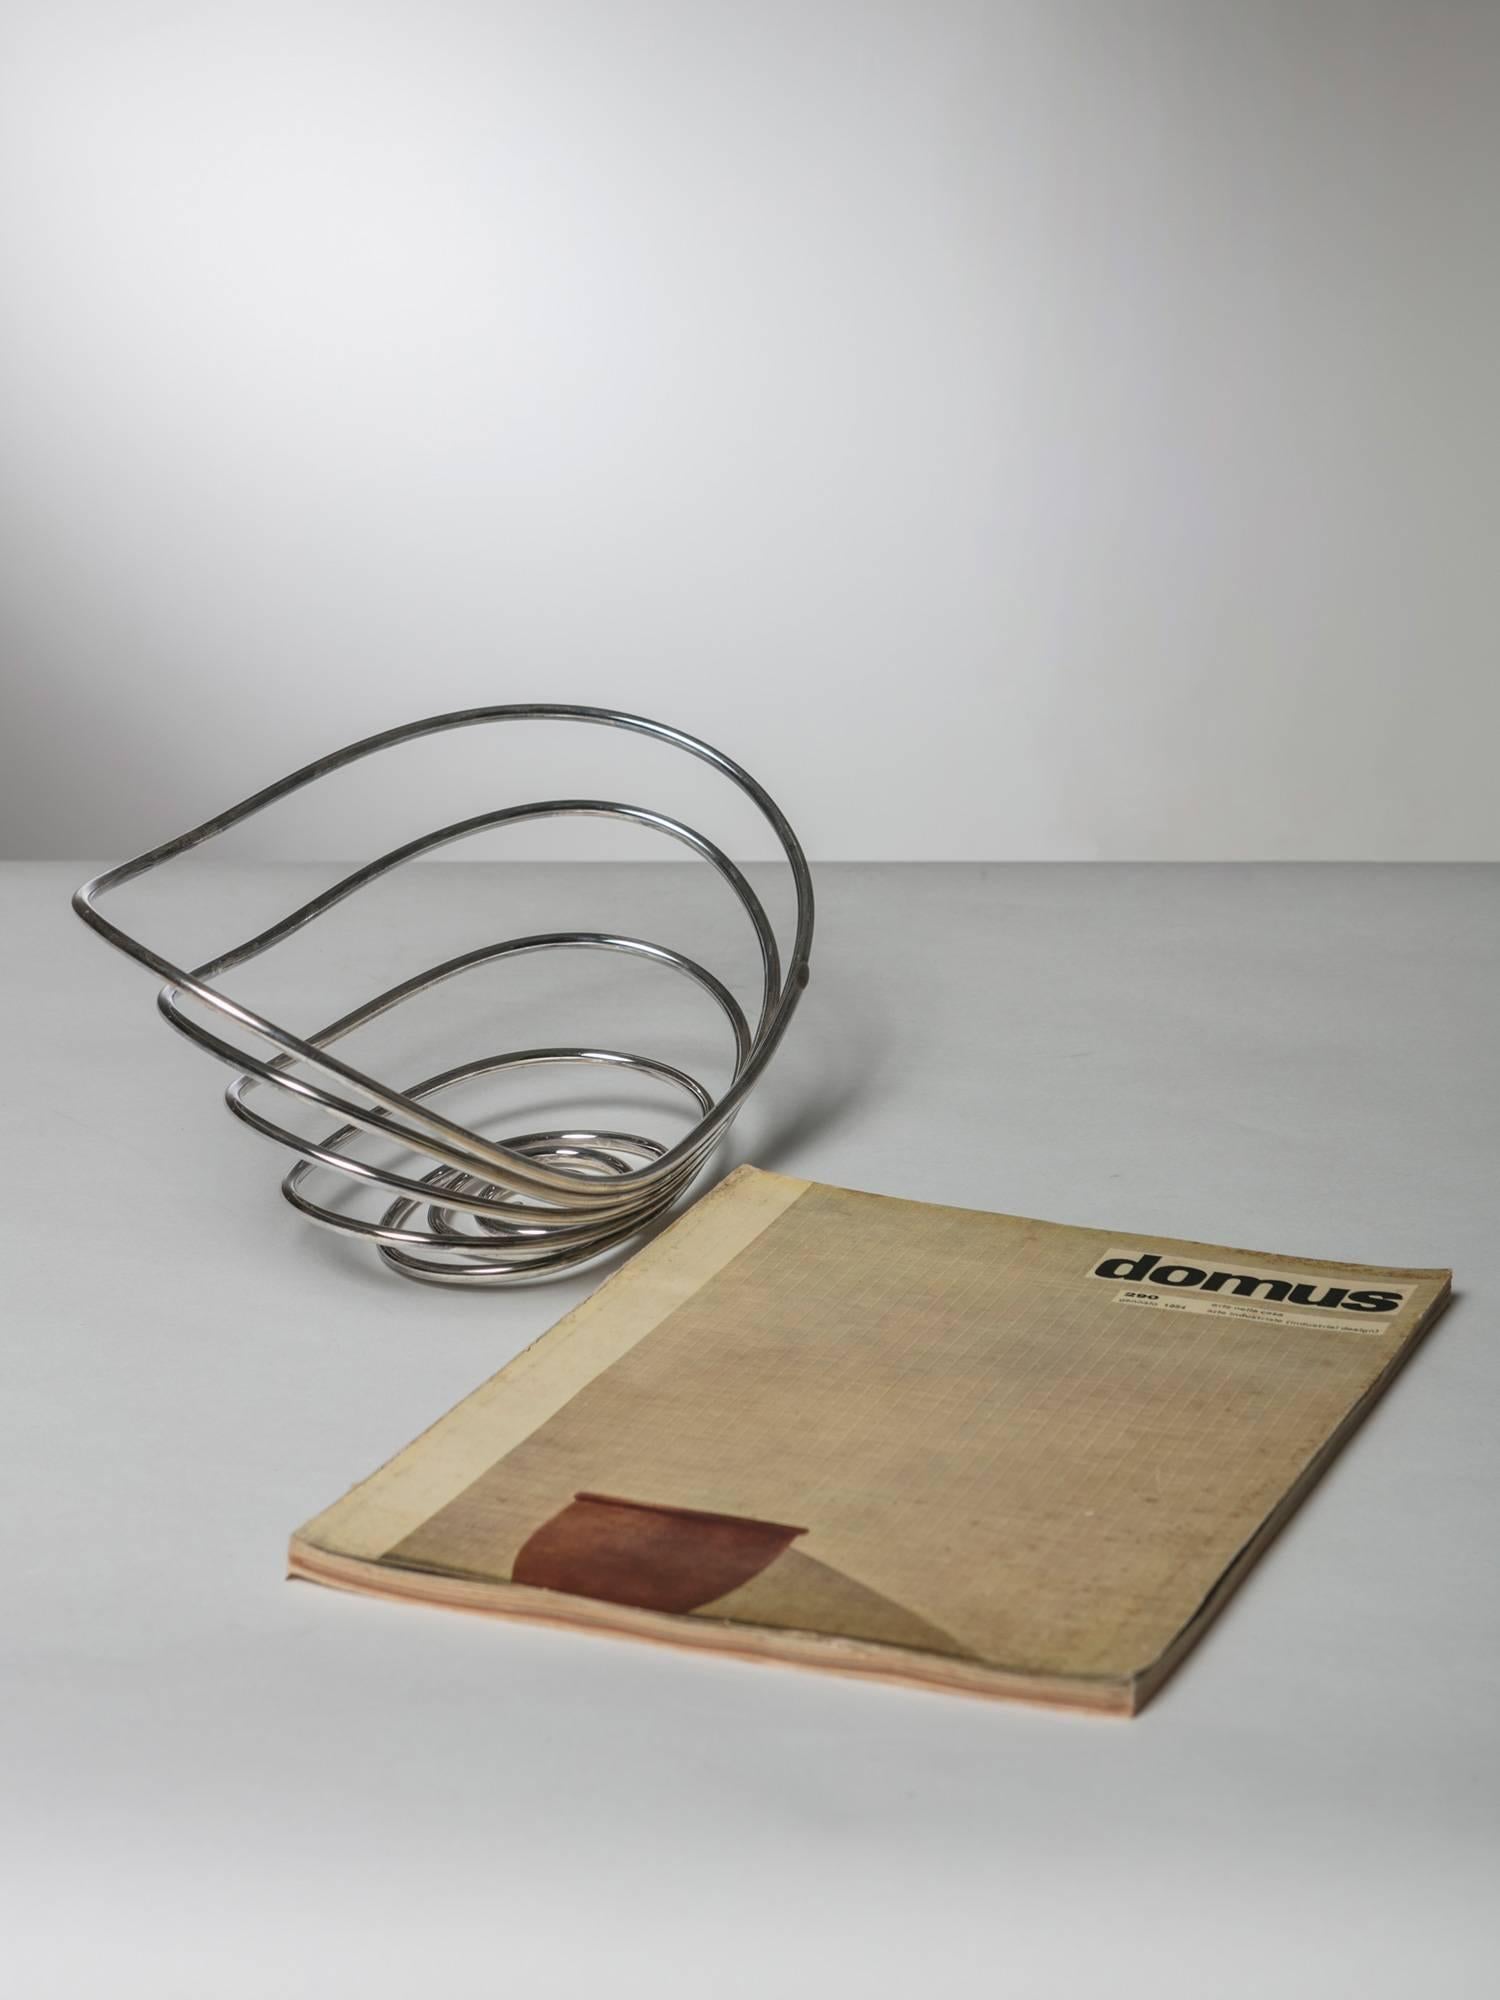 Cesto bowl by Lino Sabattini for Sabattini Argenteria.
Minimalist manifesto with a single rope generating the whole shape.